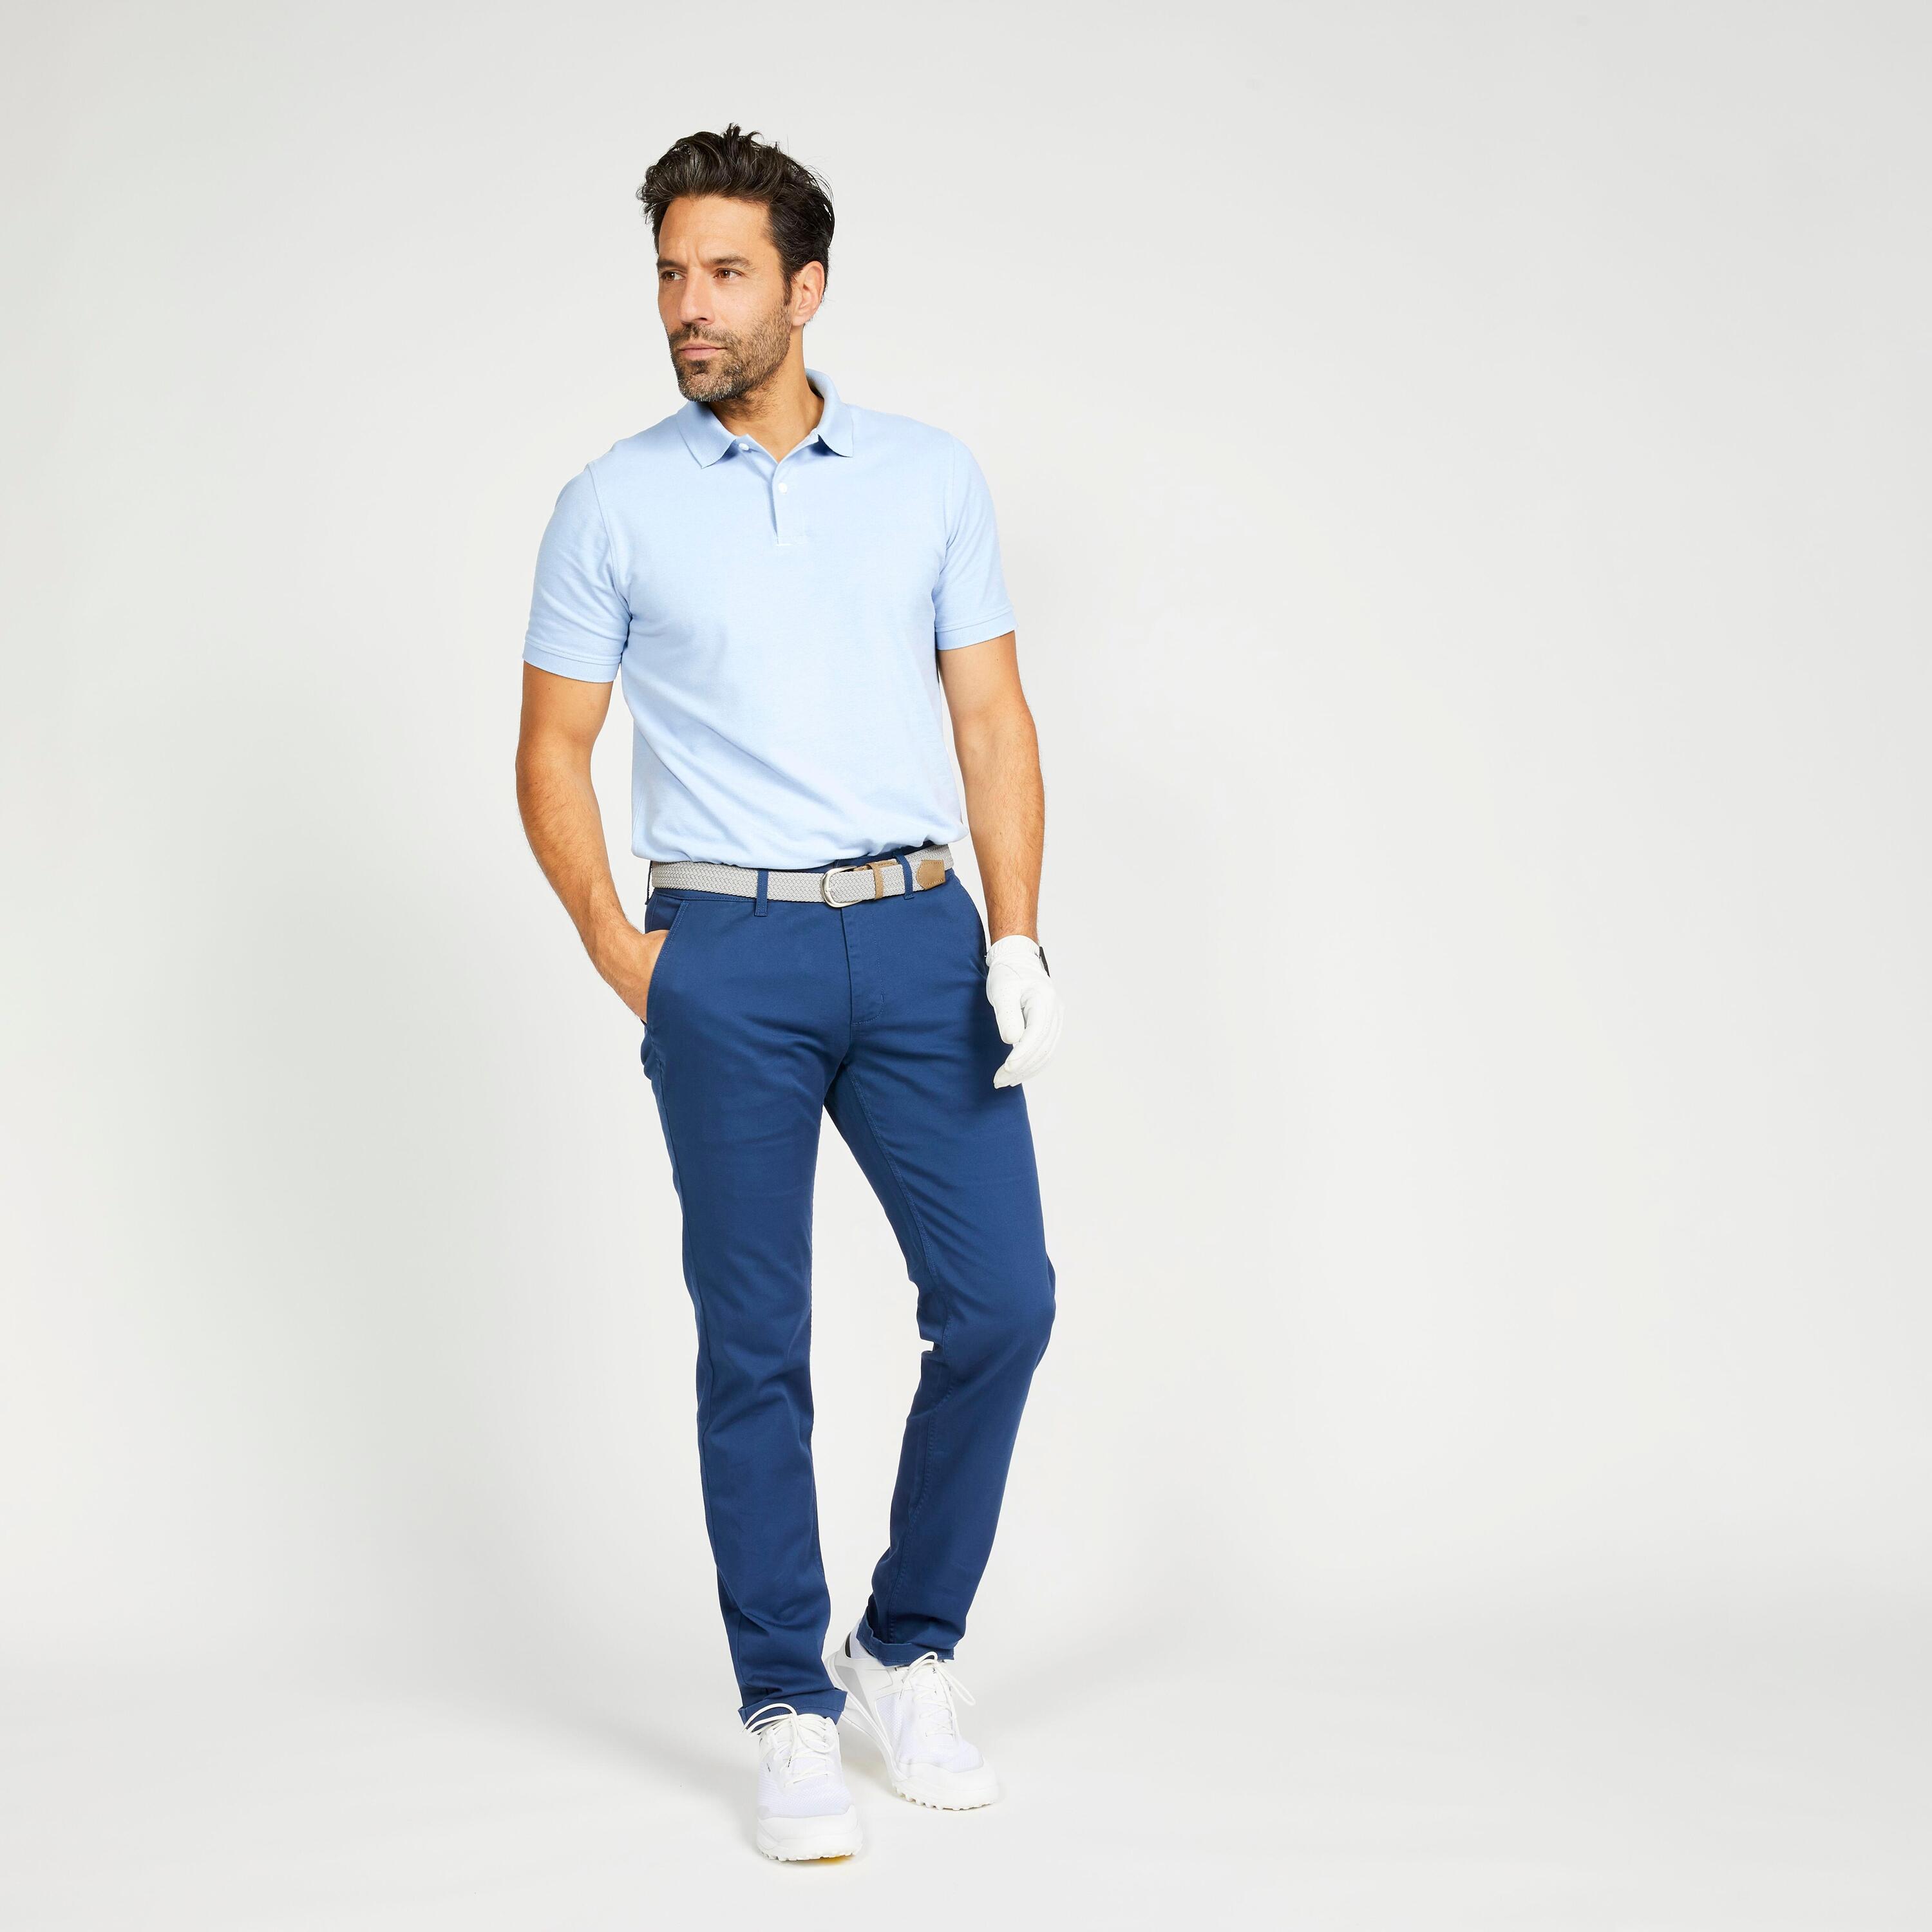 Men's short-sleeved golf polo shirt - MW500 sky blue 2/5